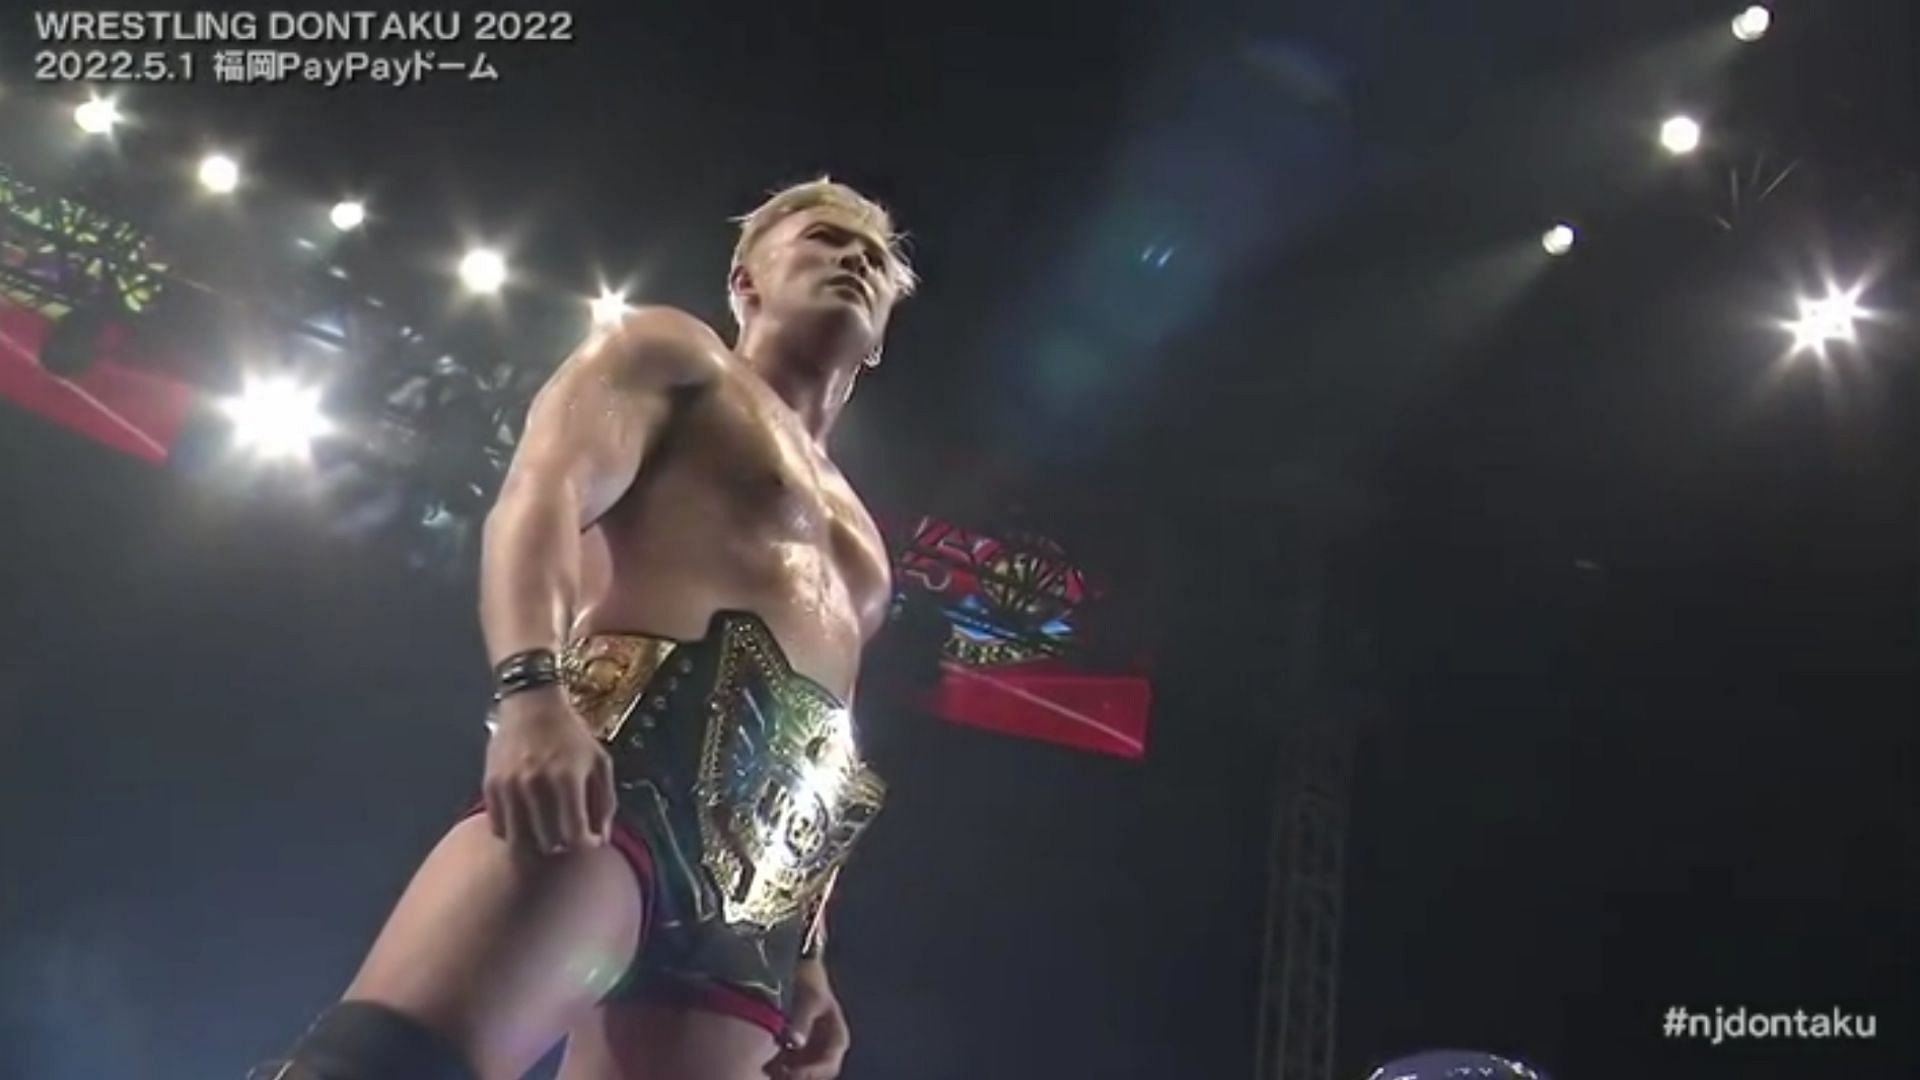 Kazuchika Okada recently retained the IWGP World Heavyweight Championship at Wrestling Dontaku.